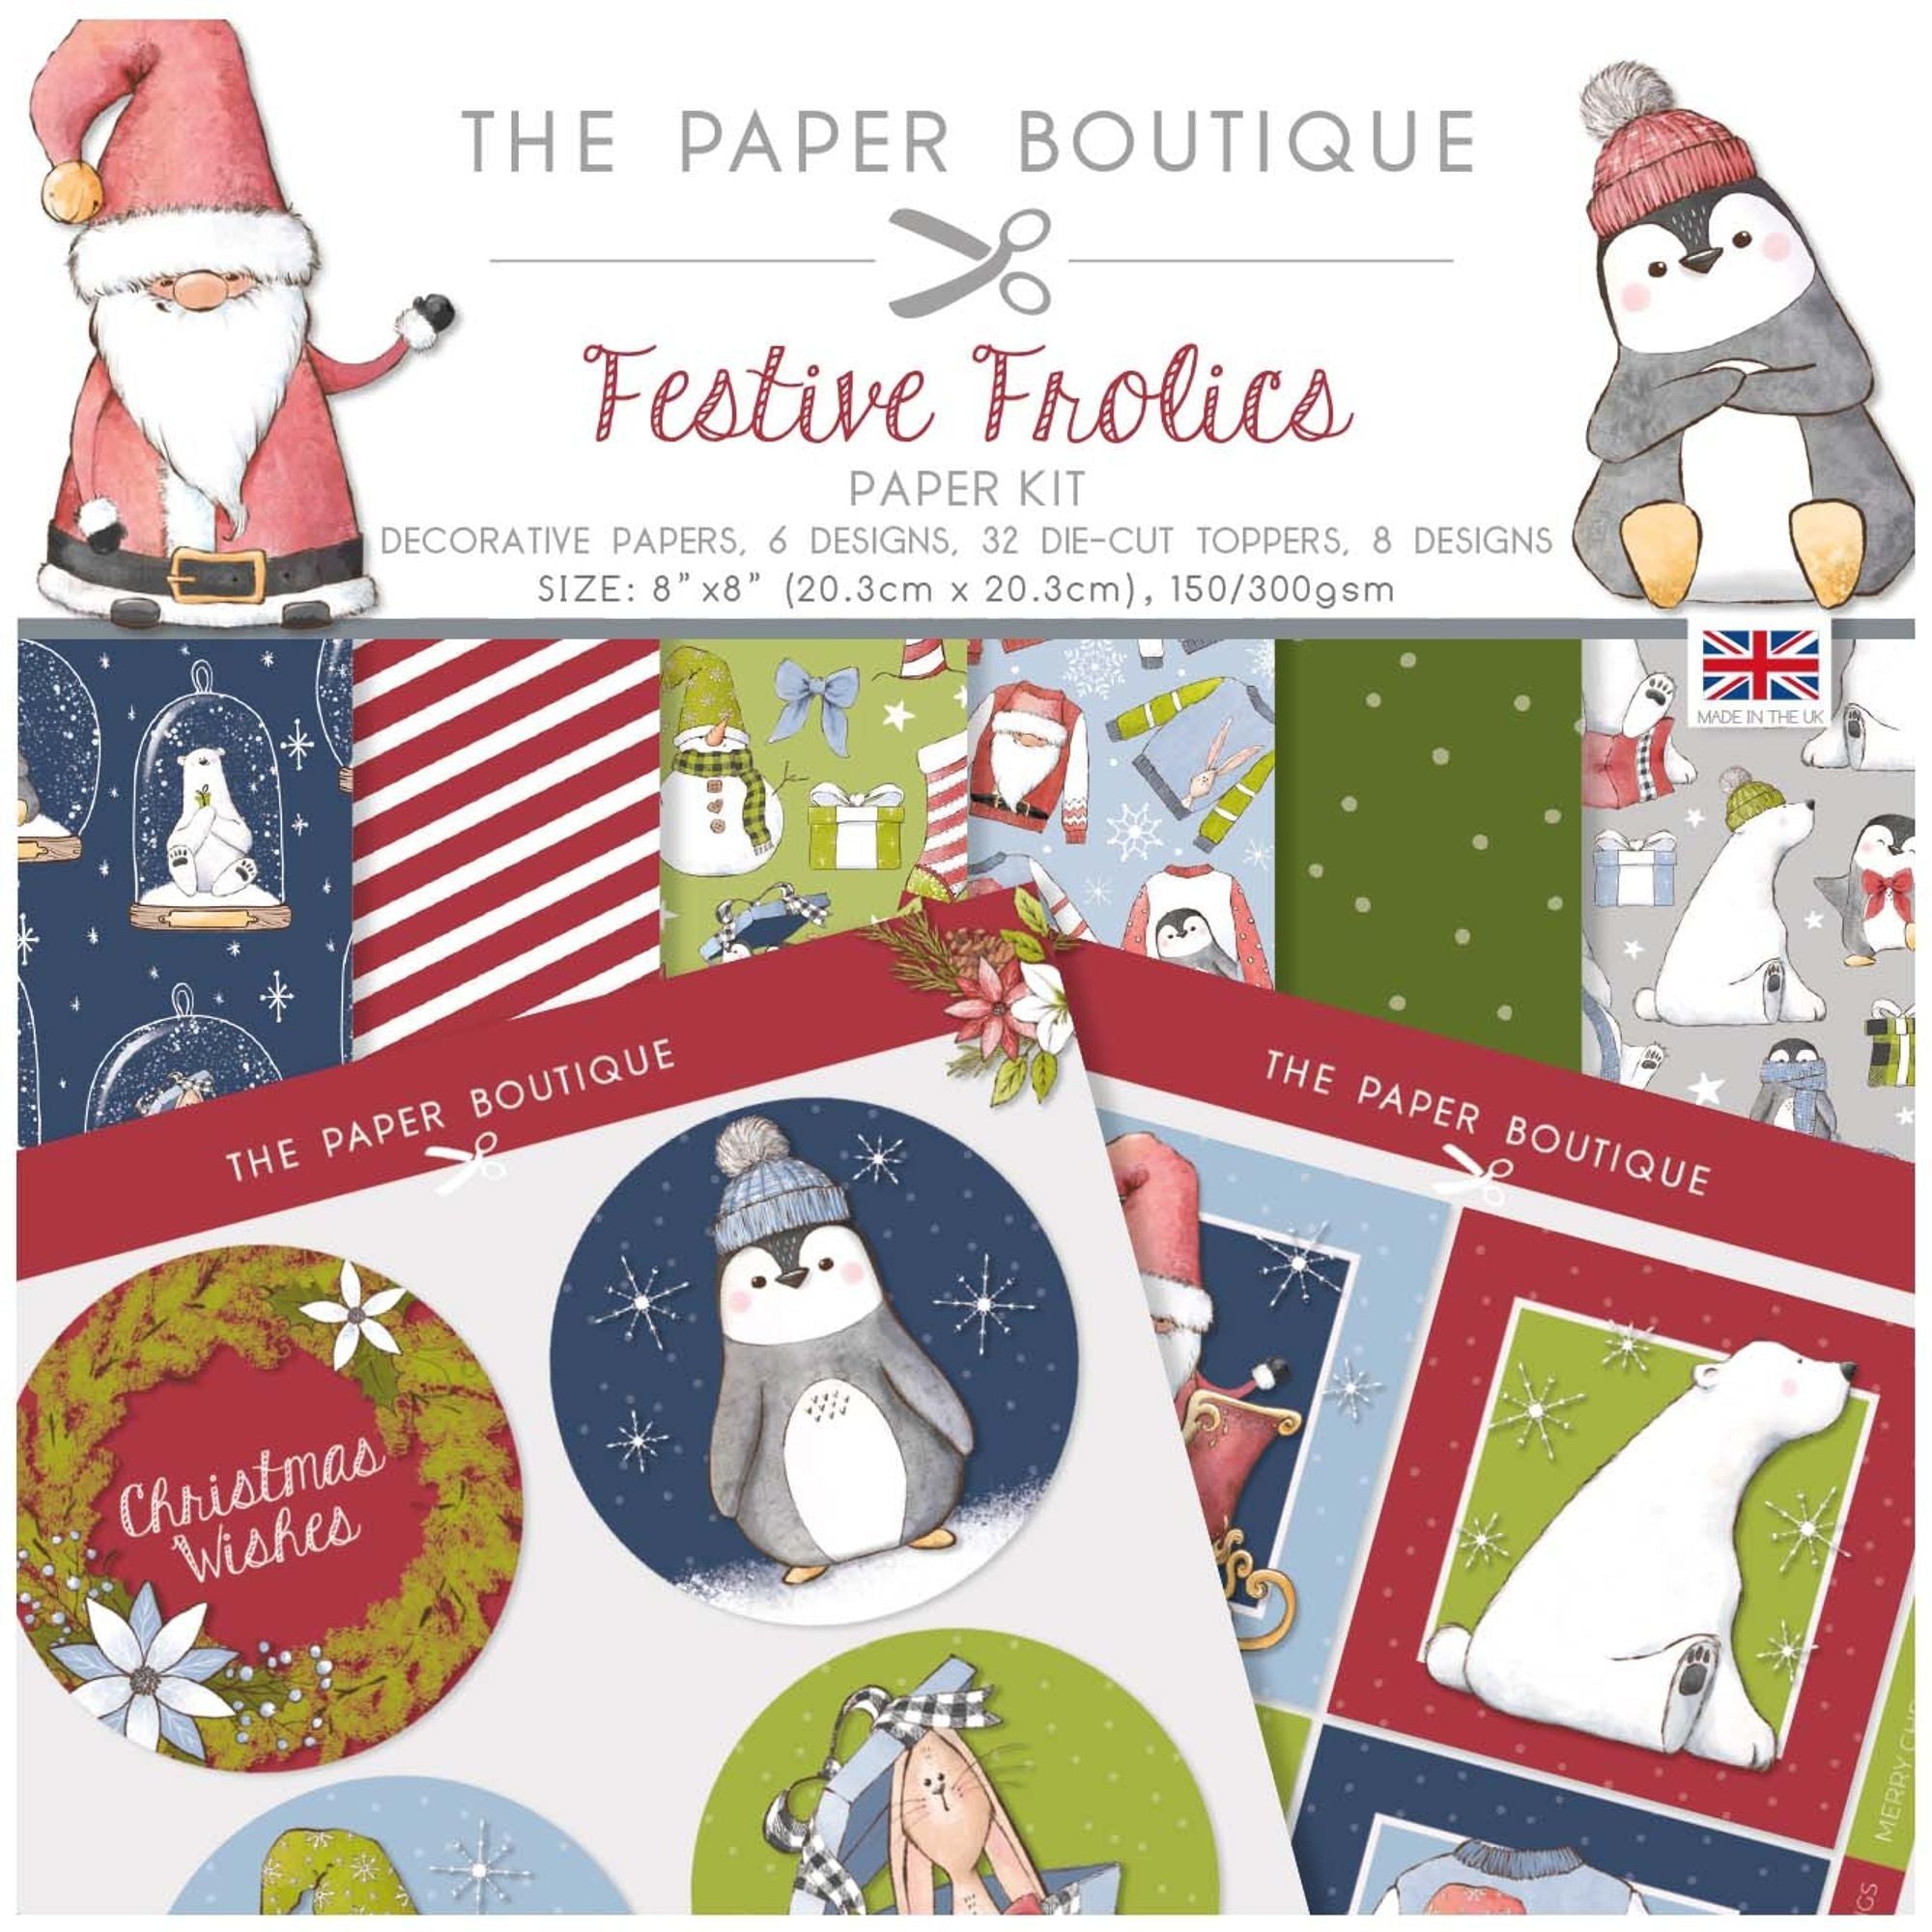 The Paper Boutique Festive Frolics Paper Kit